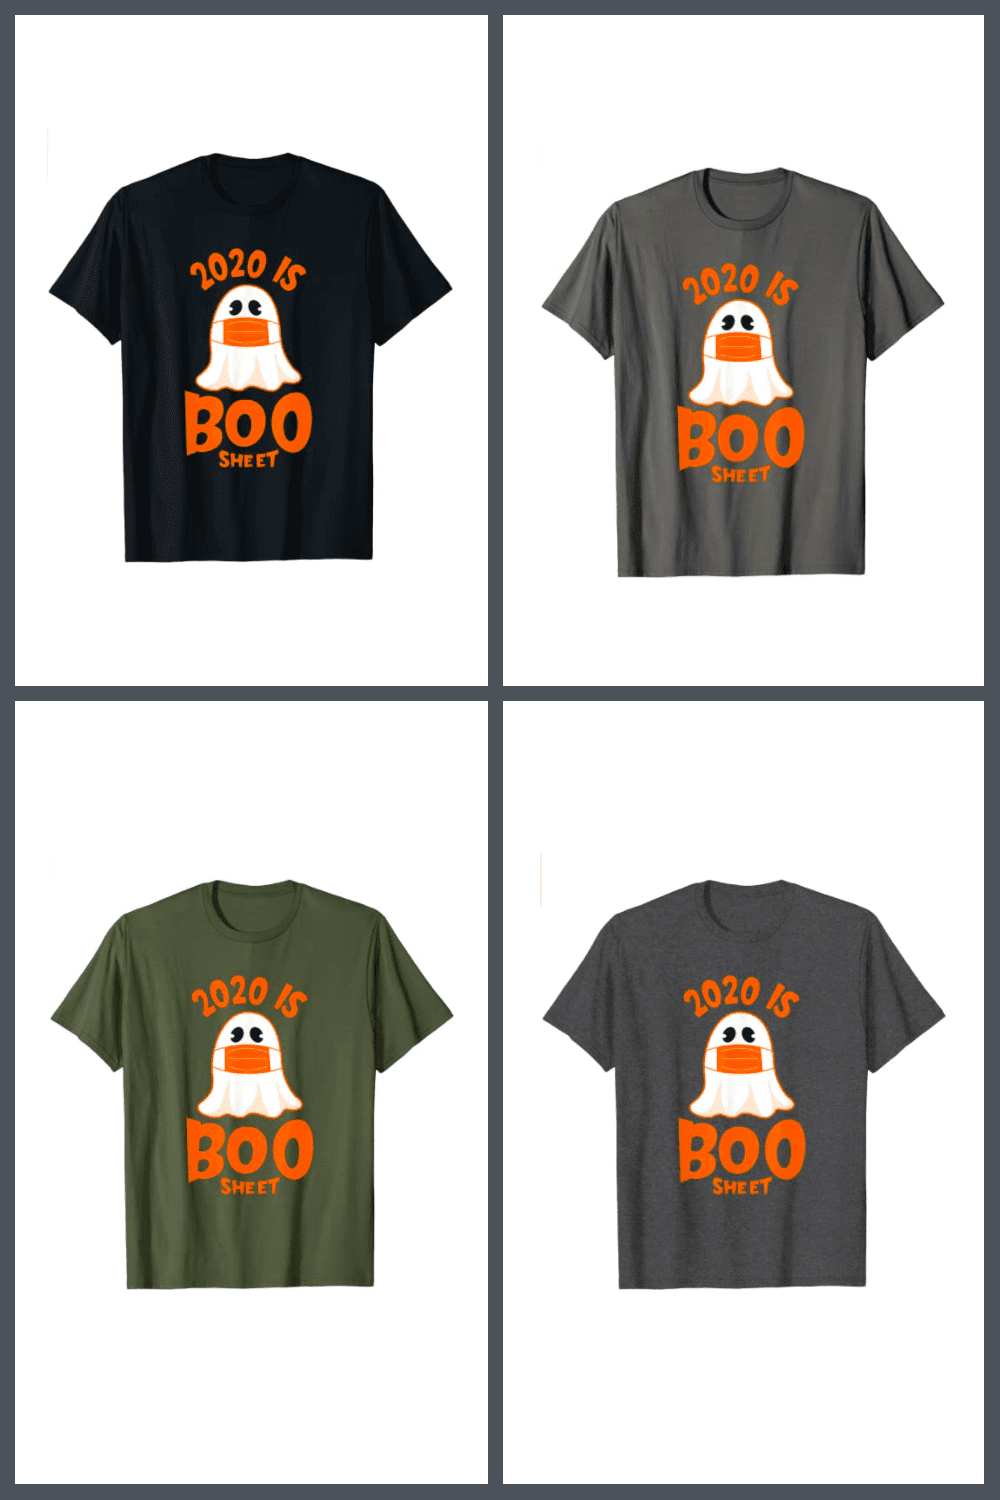 Cute Halloween costume/Halloween ghost t-shirt/Unisex Adult sizes/Boo Halloween tshirt